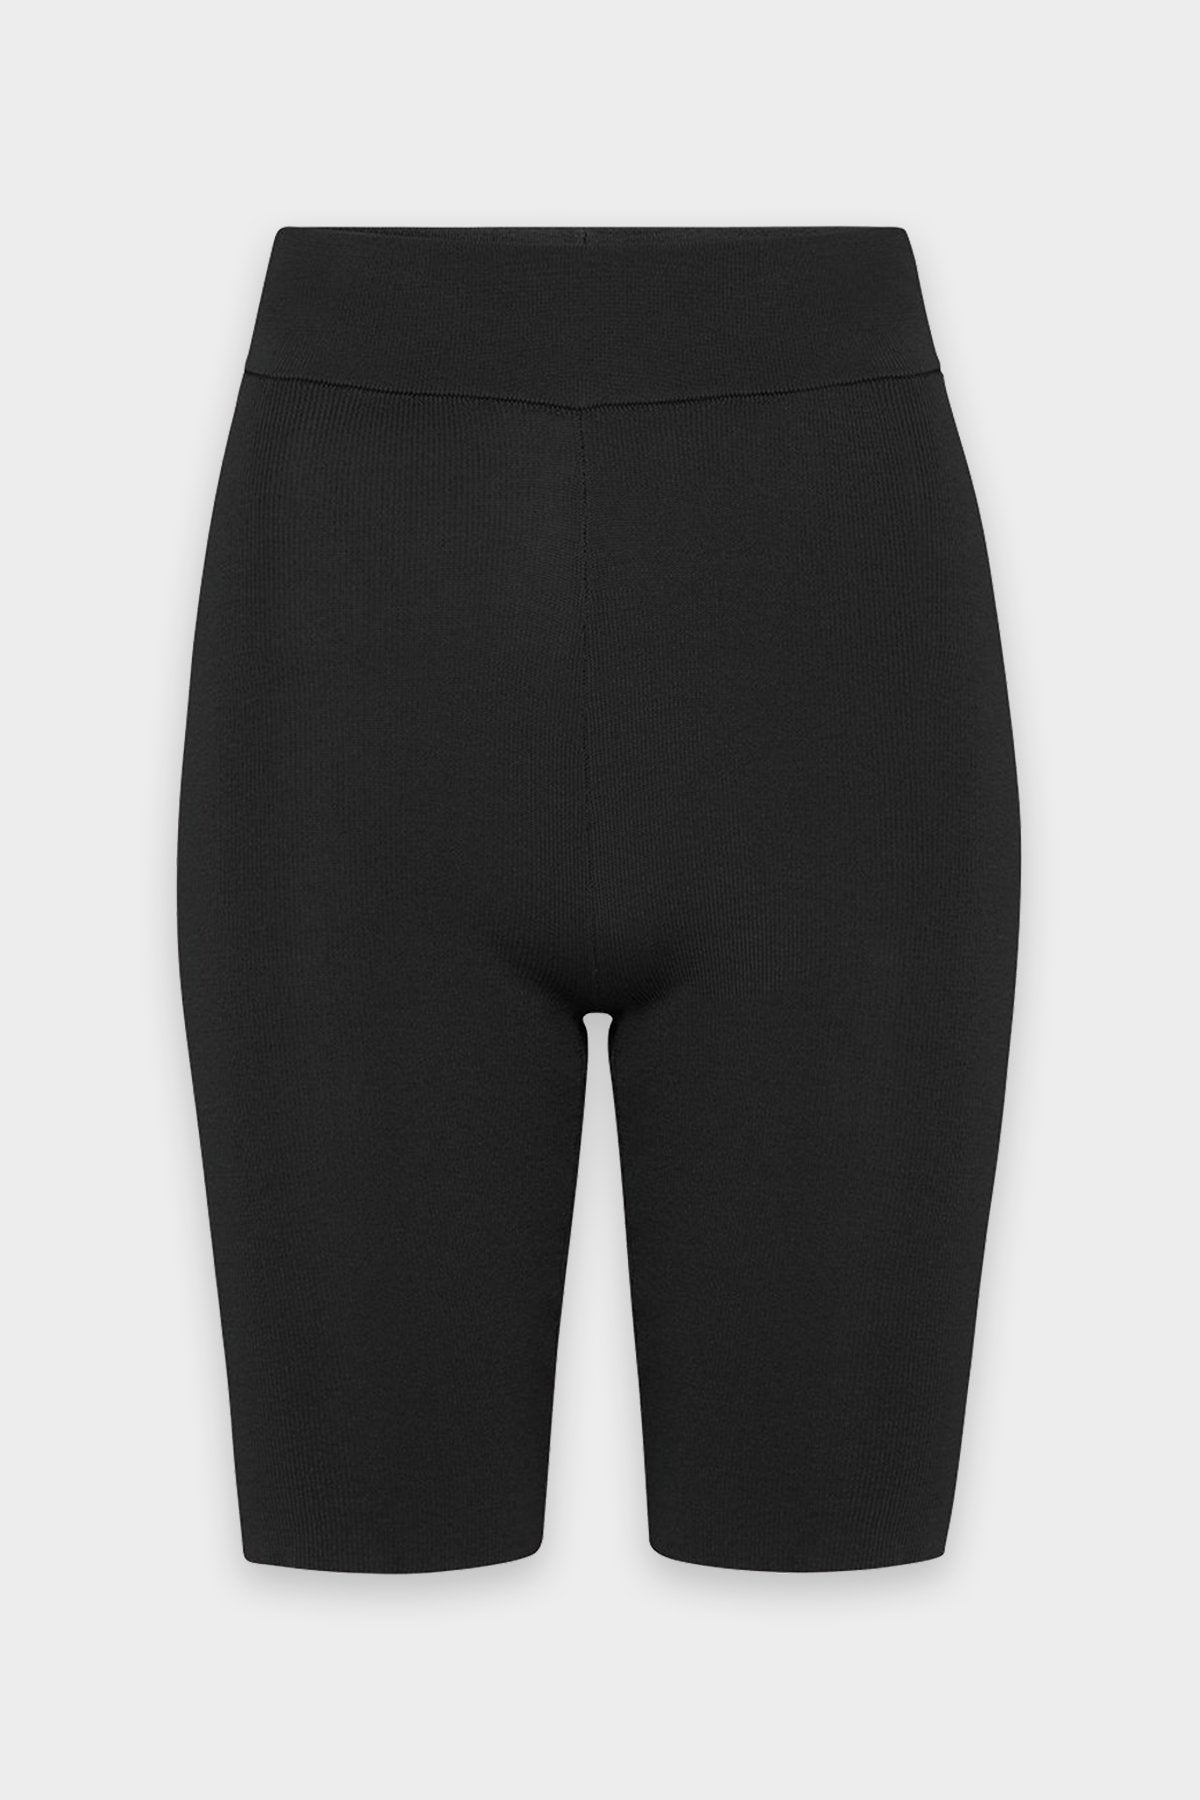 Teos Knit Bike Shorts in Black - shop-olivia.com